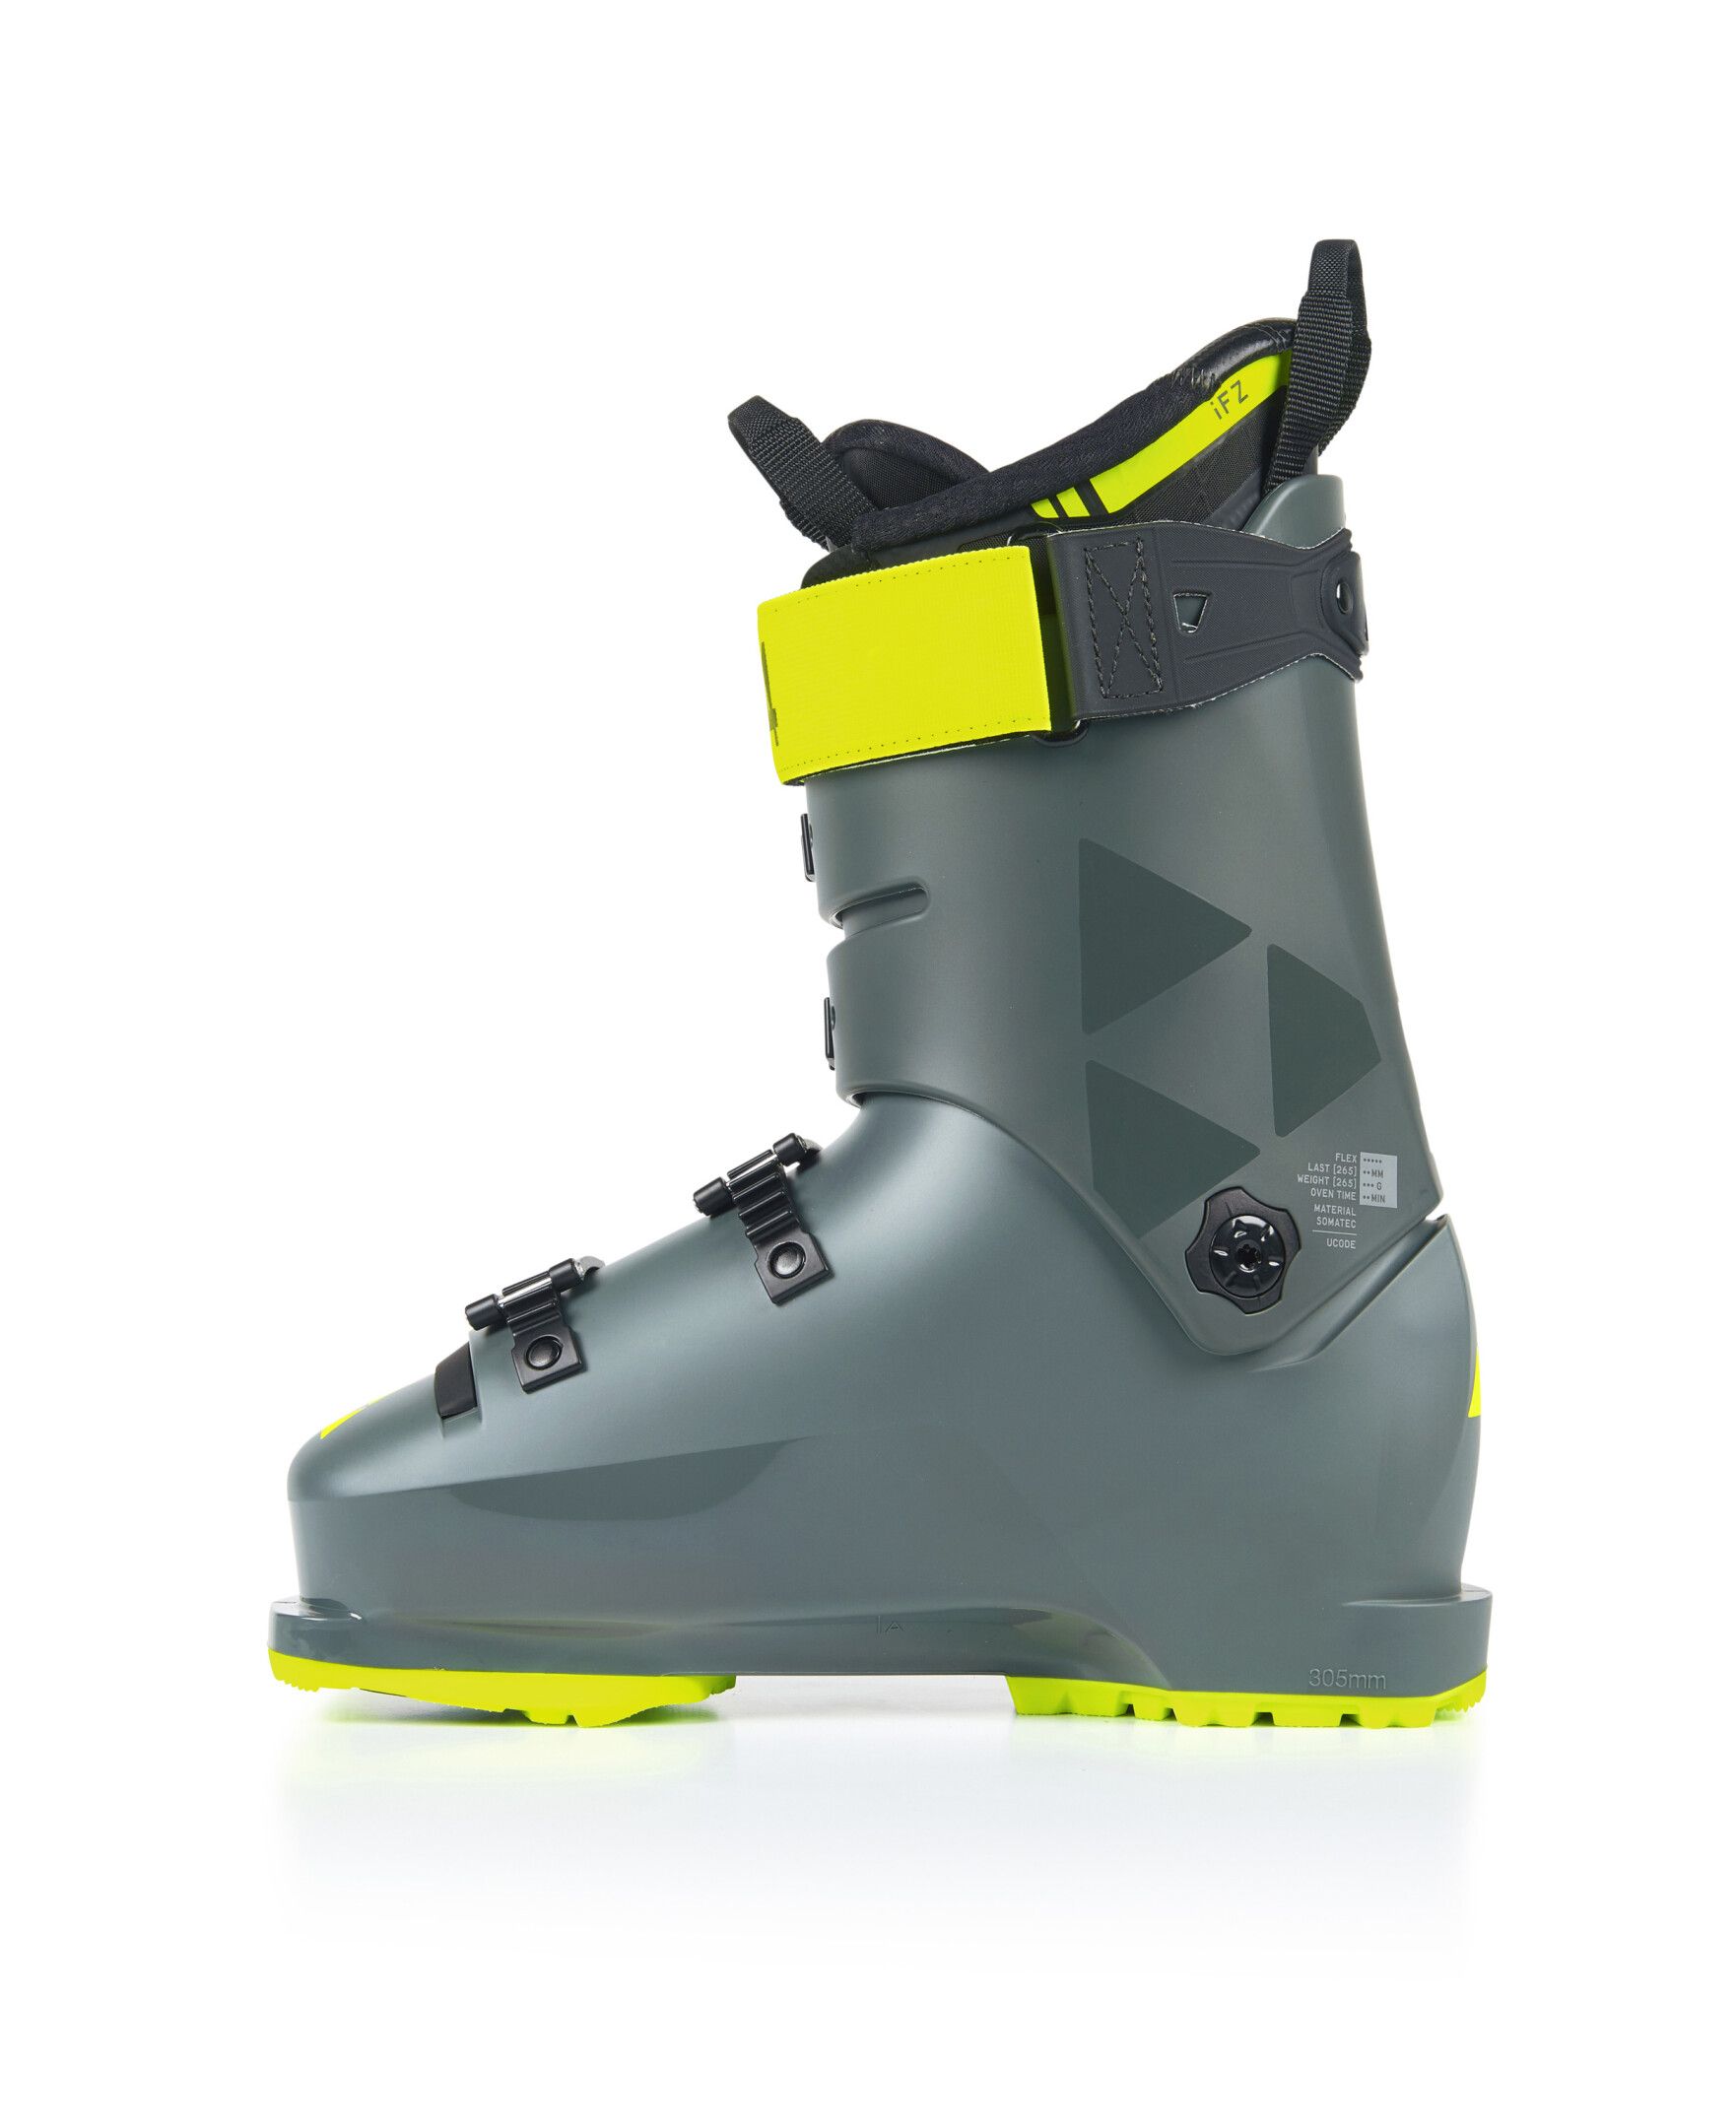 Chaussures de ski alpin The Curv 120 - Grey / Grey